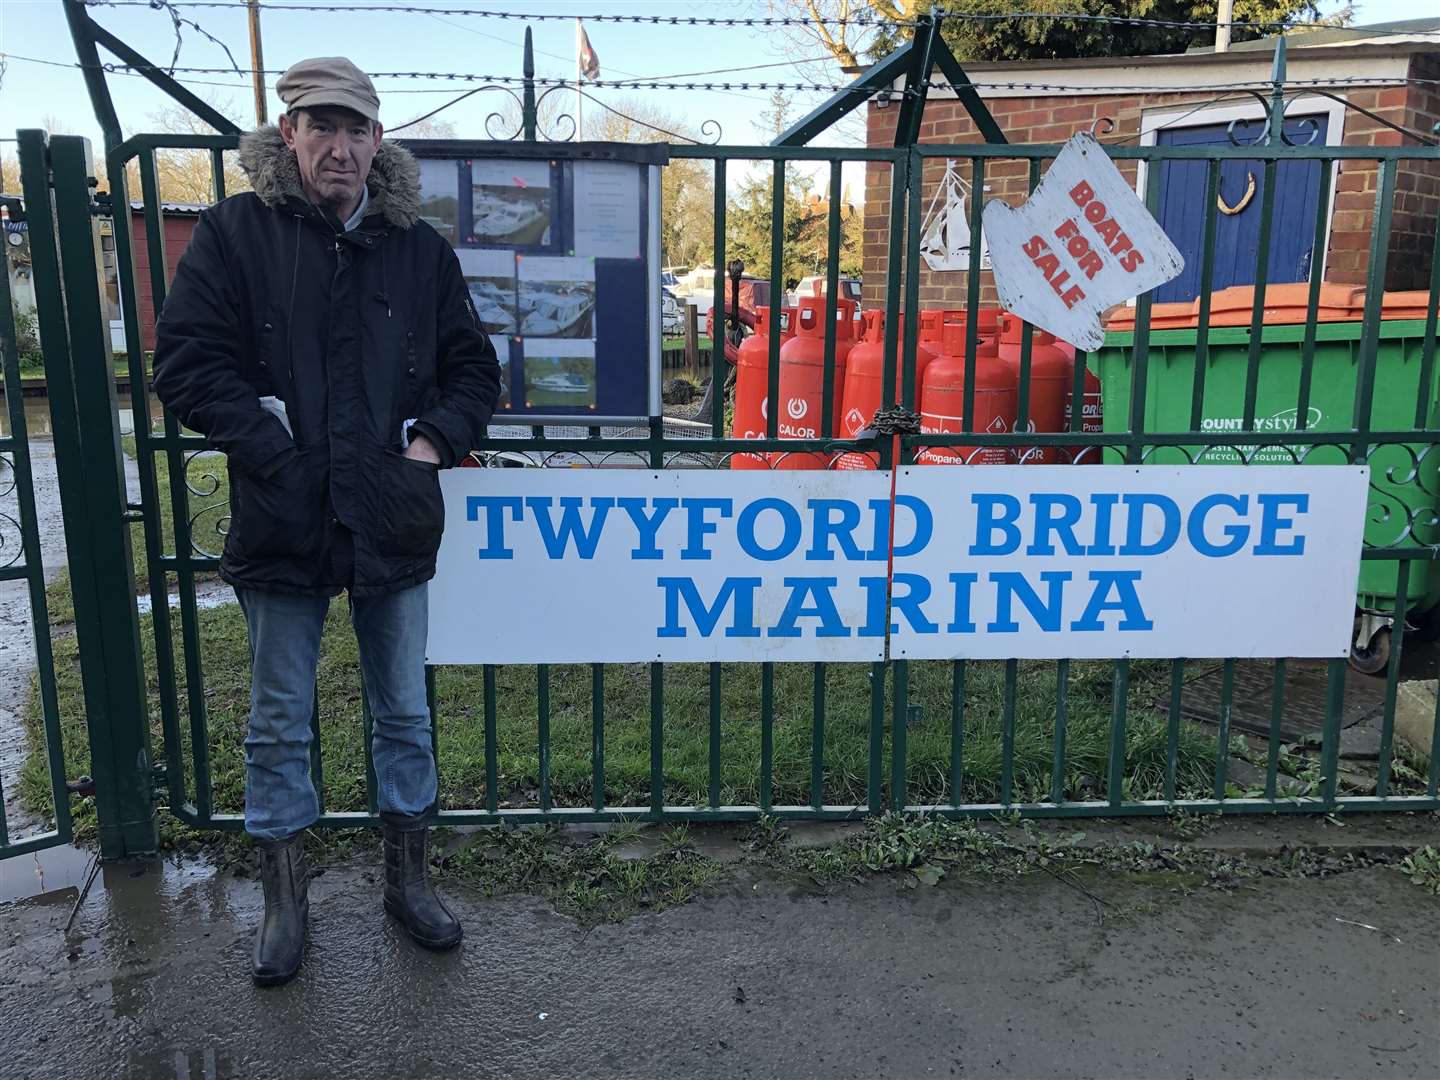 Paul Knibbs was stranded at Twyford Bridge Marina